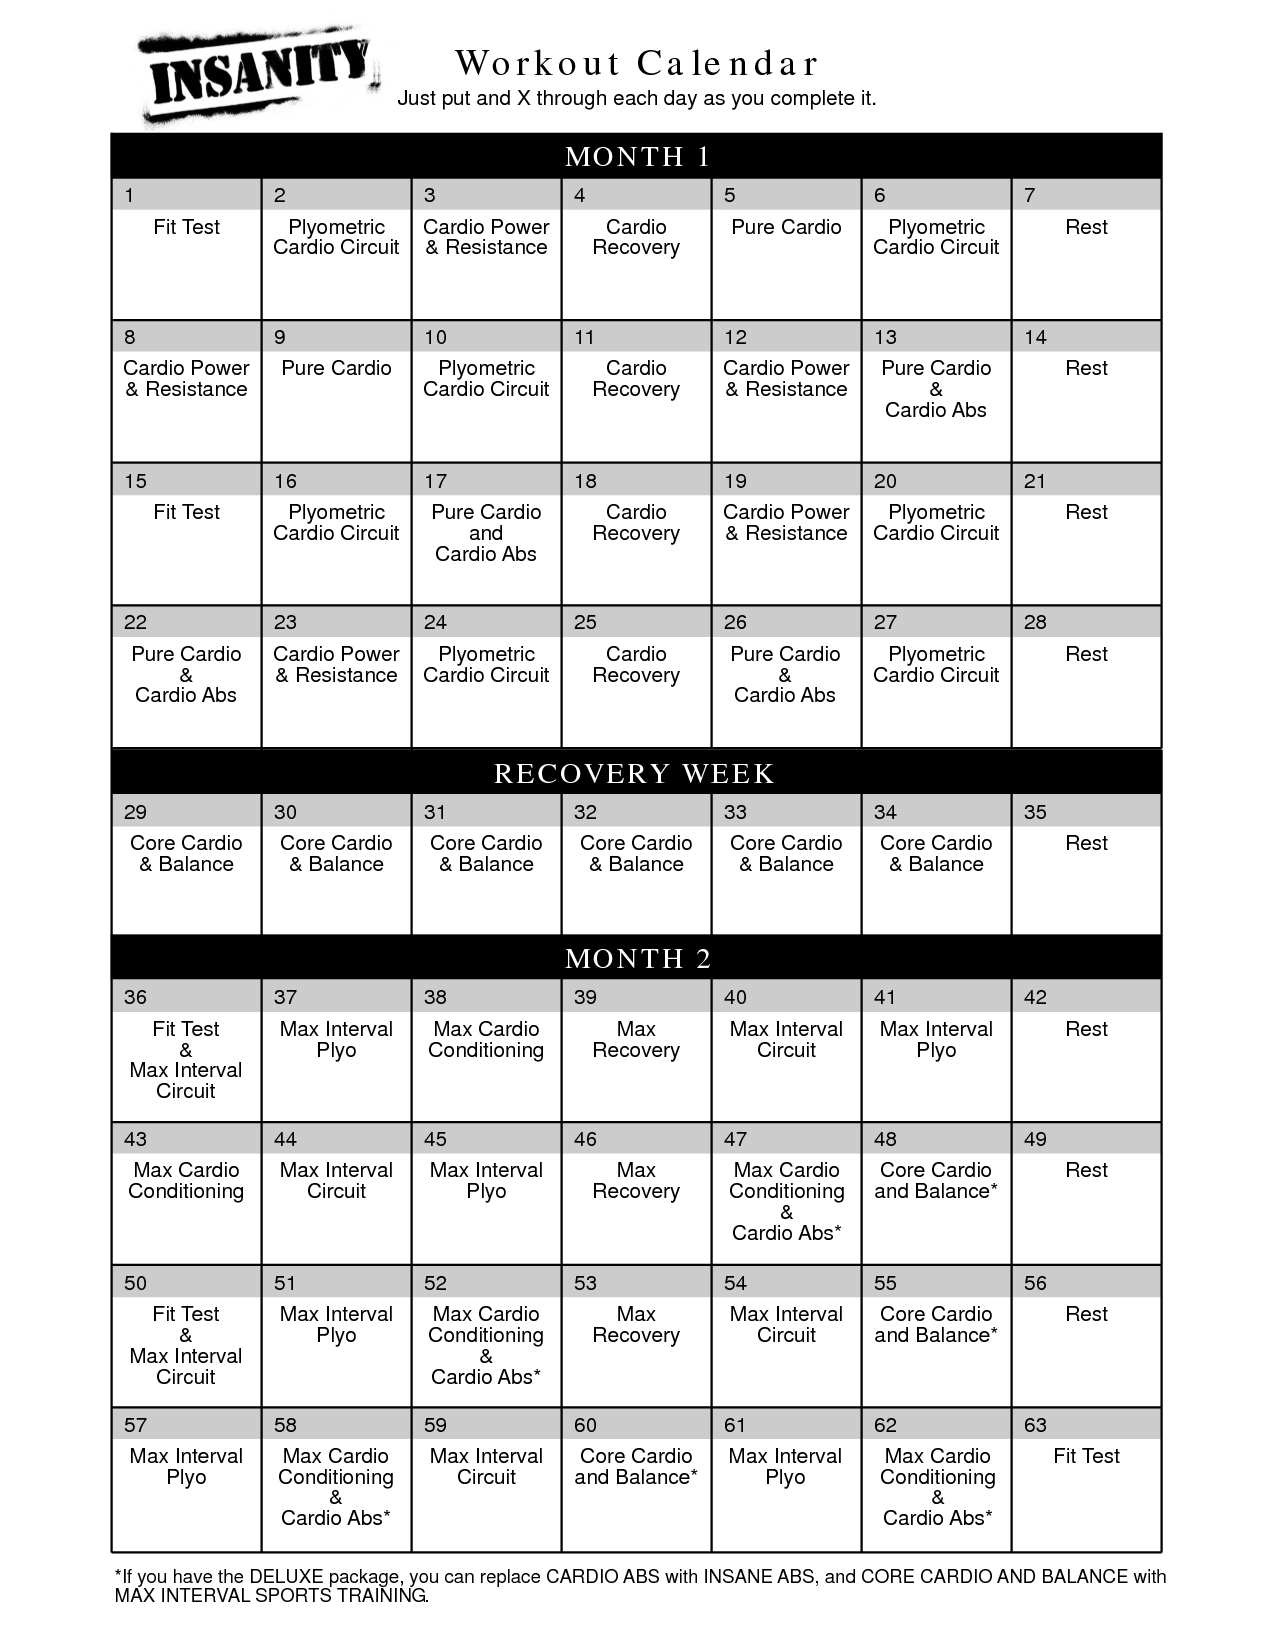 Insanity Workout Calendar.pdf